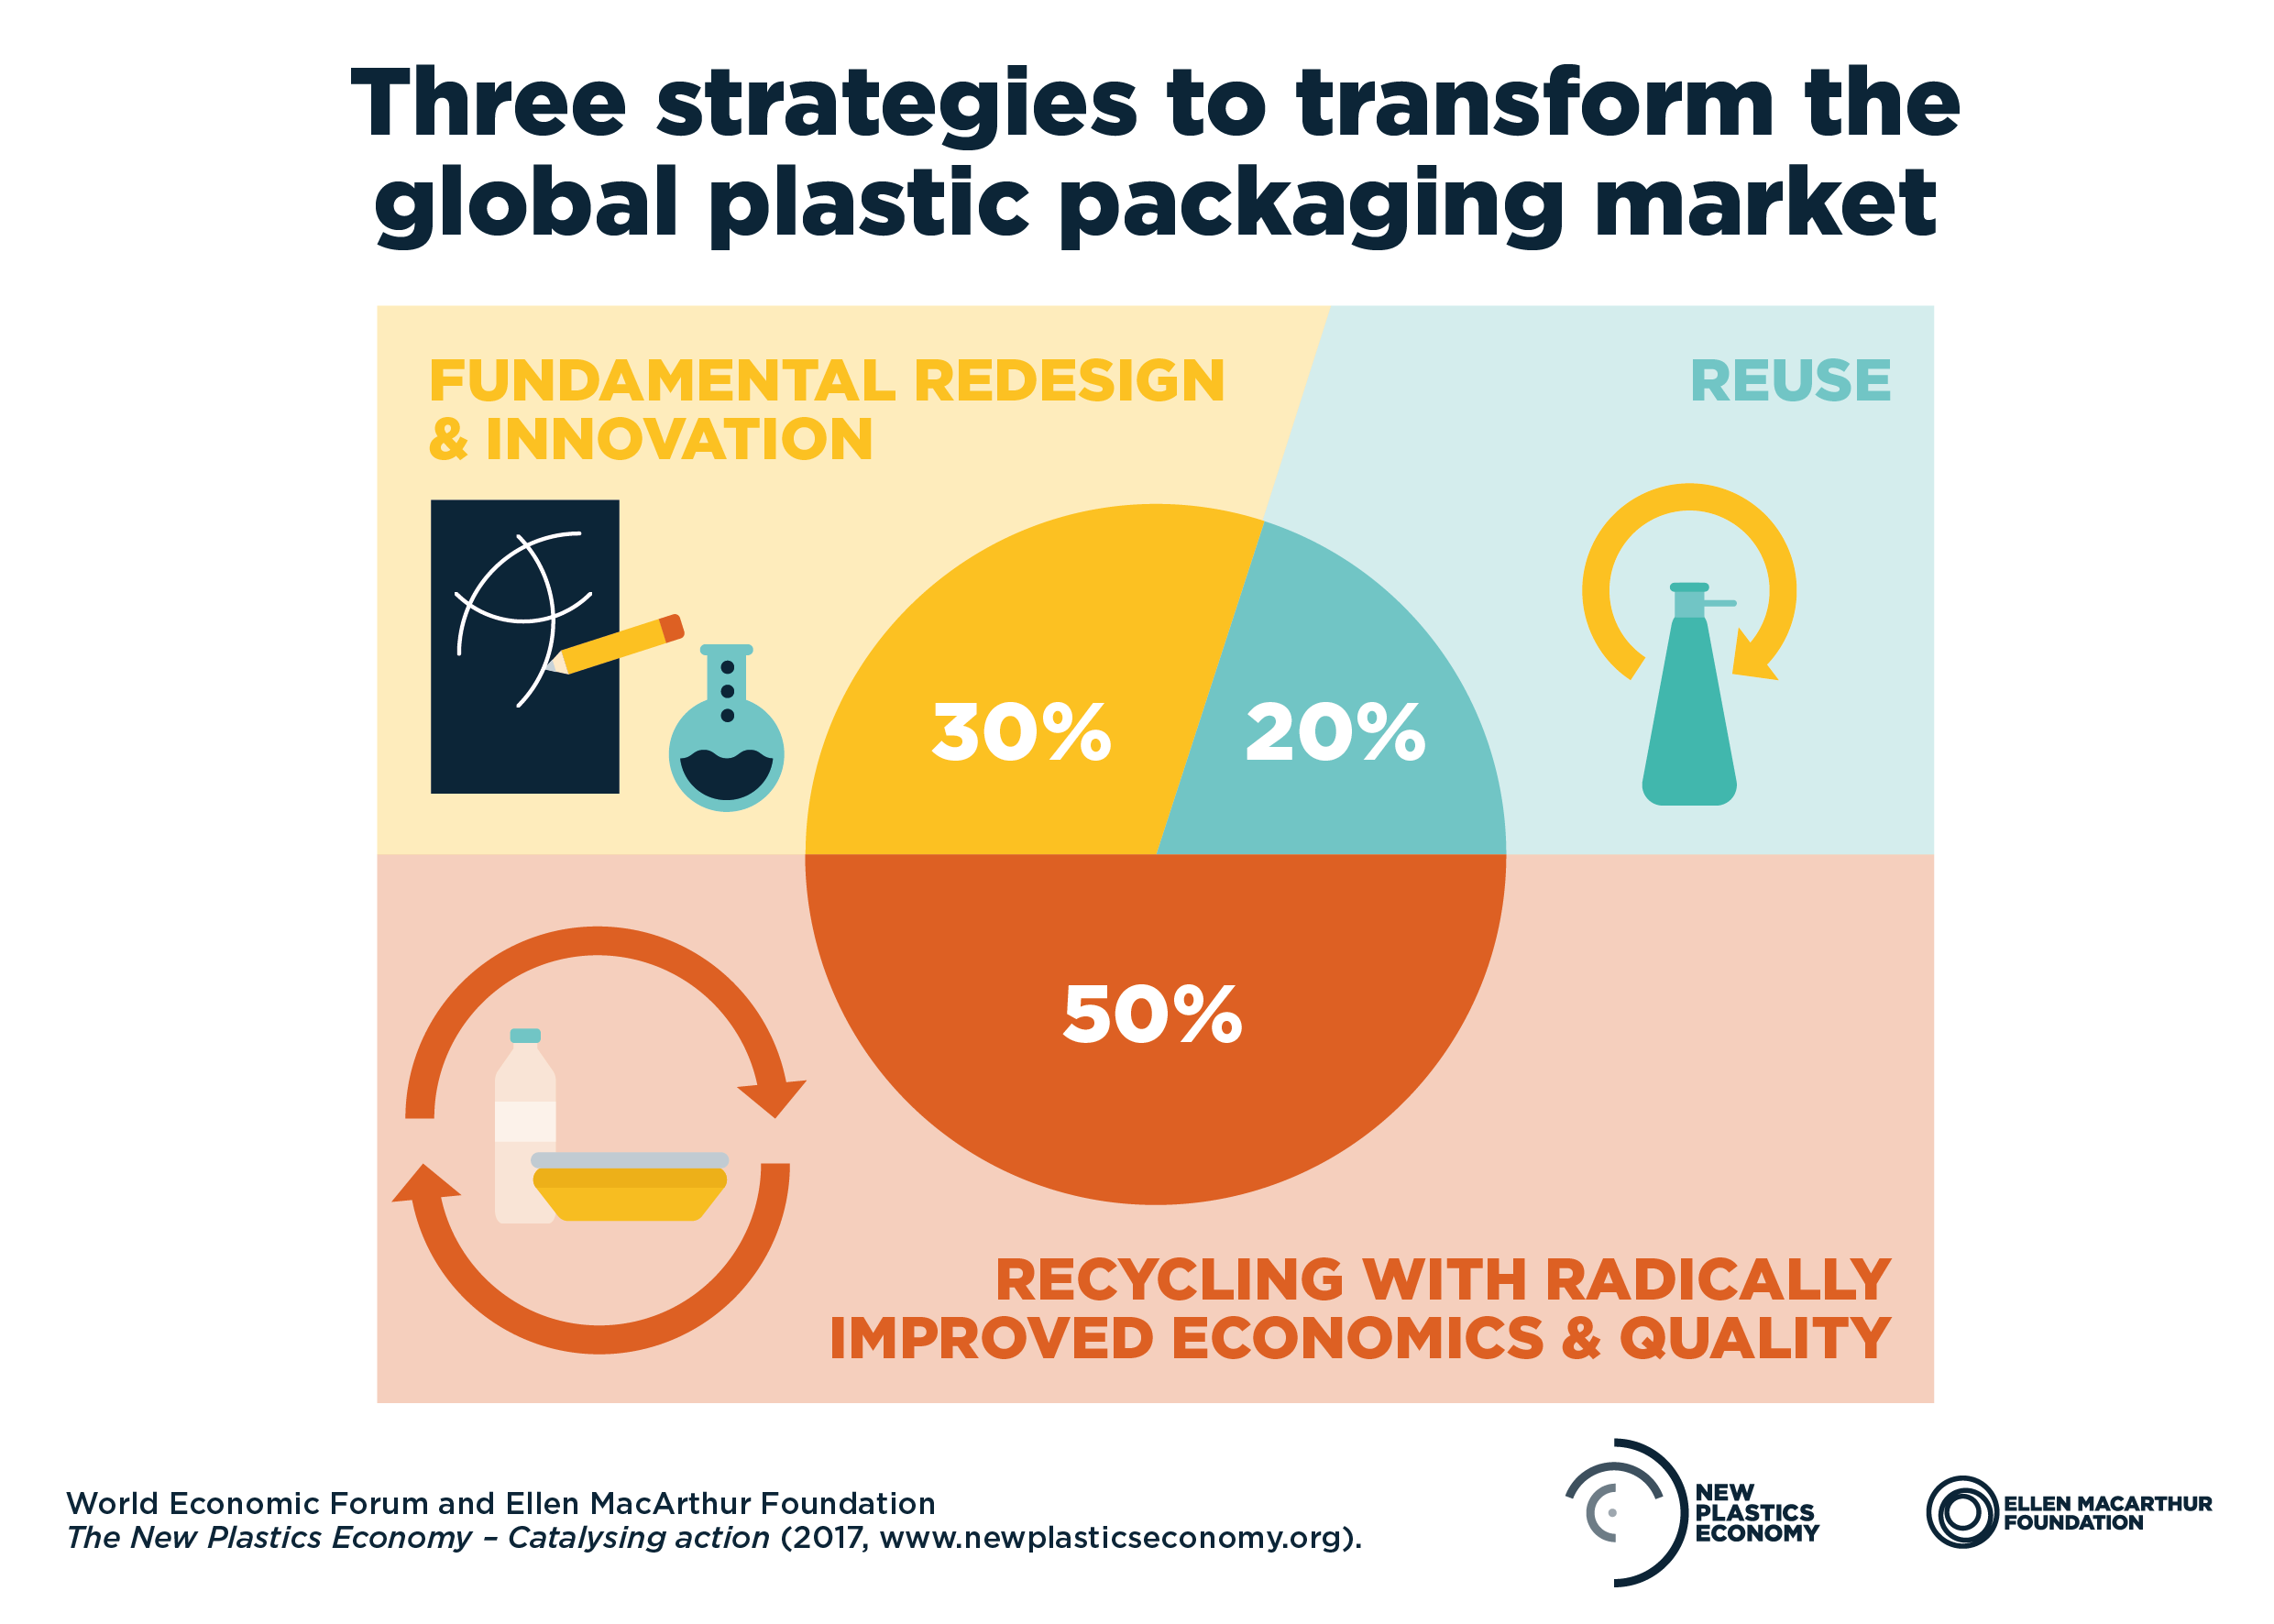 Three strategies to transform global plastic packaging market